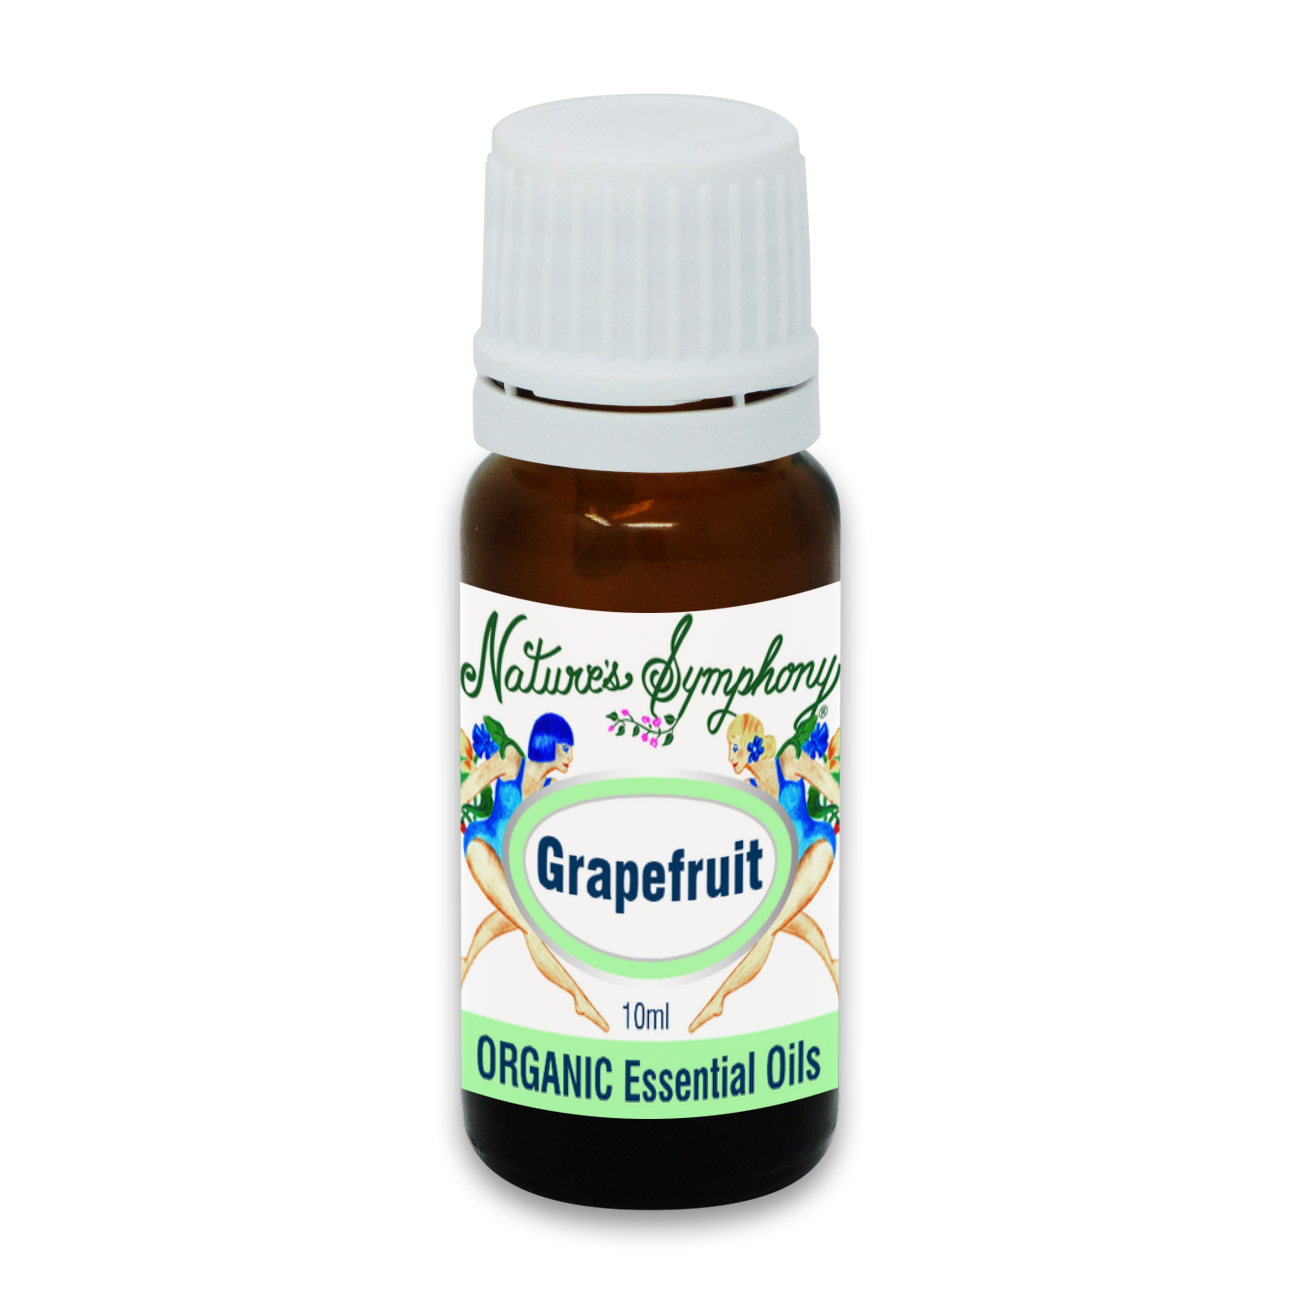 Grapefruit, Organic/Wildcrafted oil - 10ml